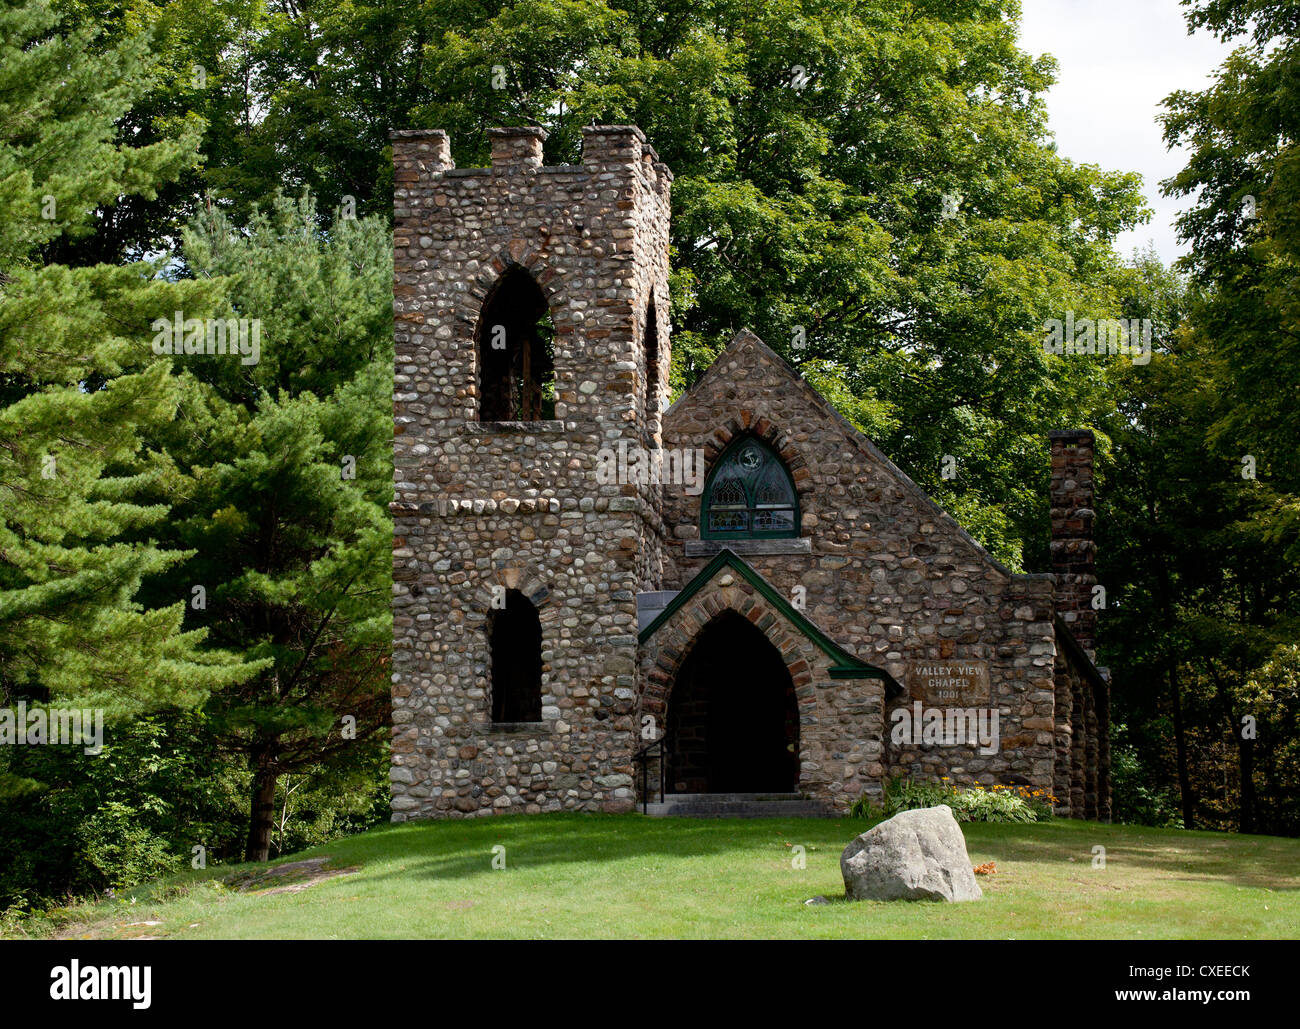 Valley View Kapelle Ticonderoga New York USA Vereinigte Staaten Amerika Adirondack State Park Stockfoto